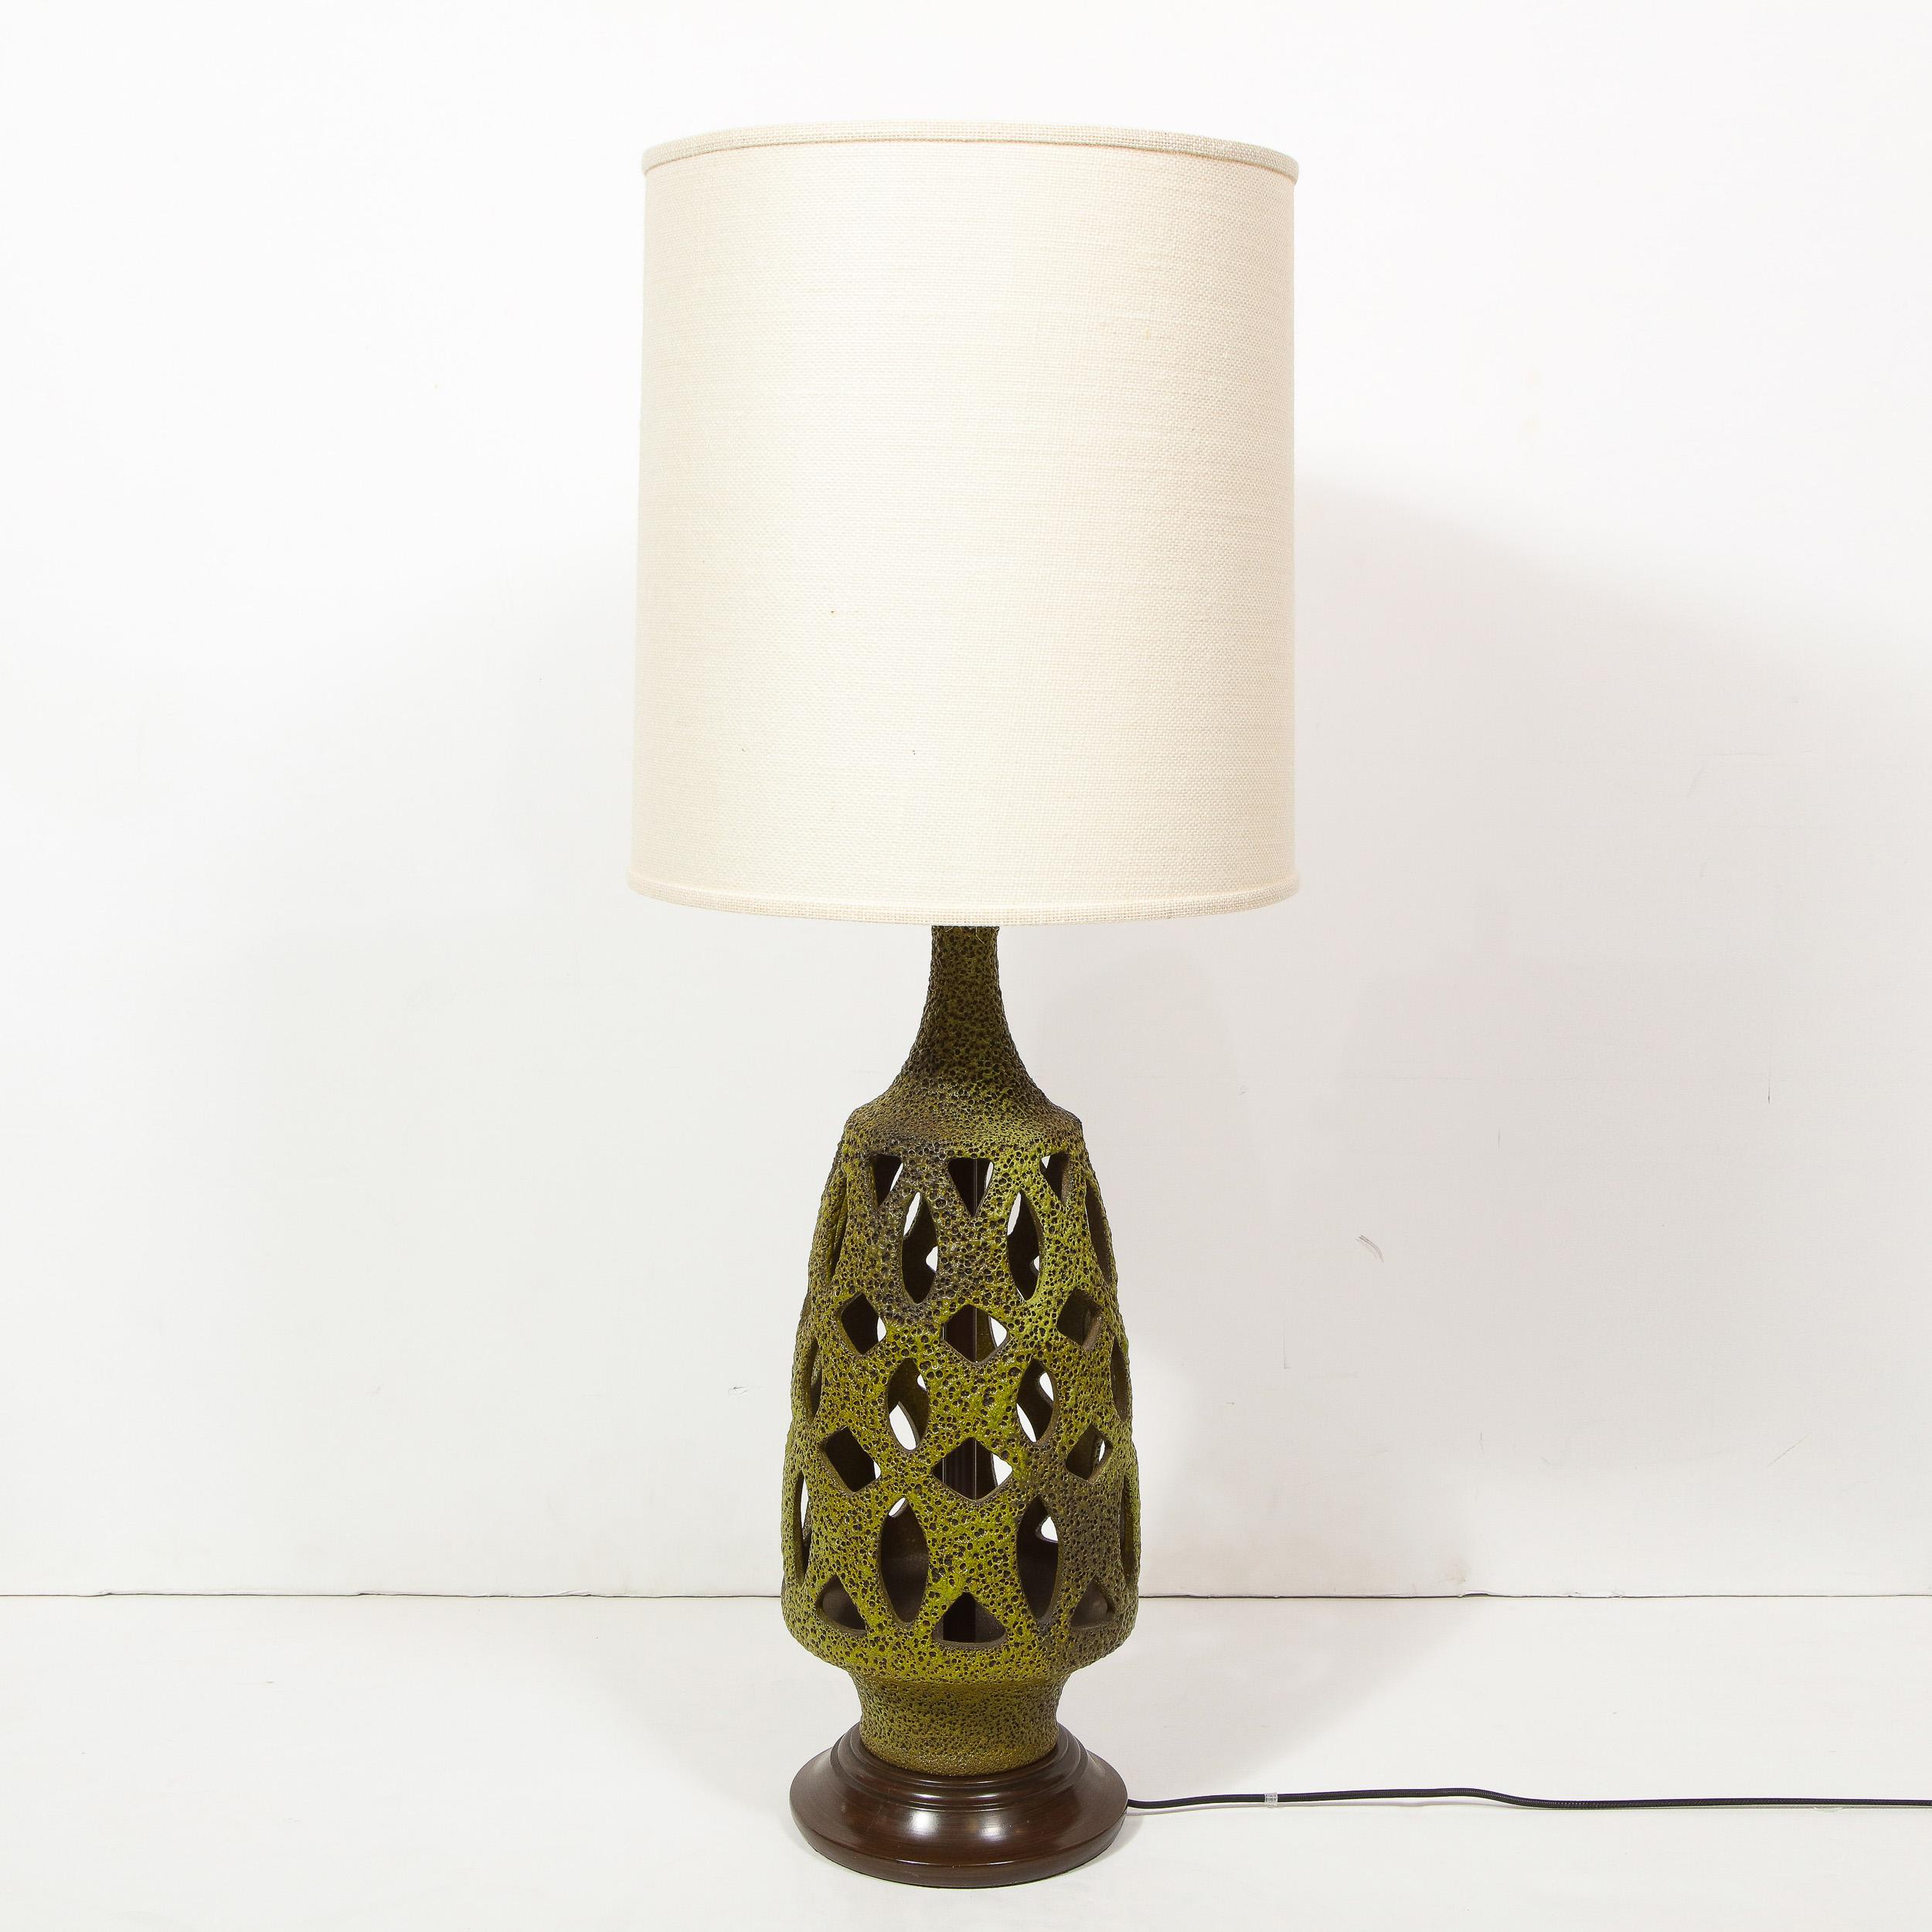 American Midcentury Organic Modern Sculptural Latticework Table Lamp